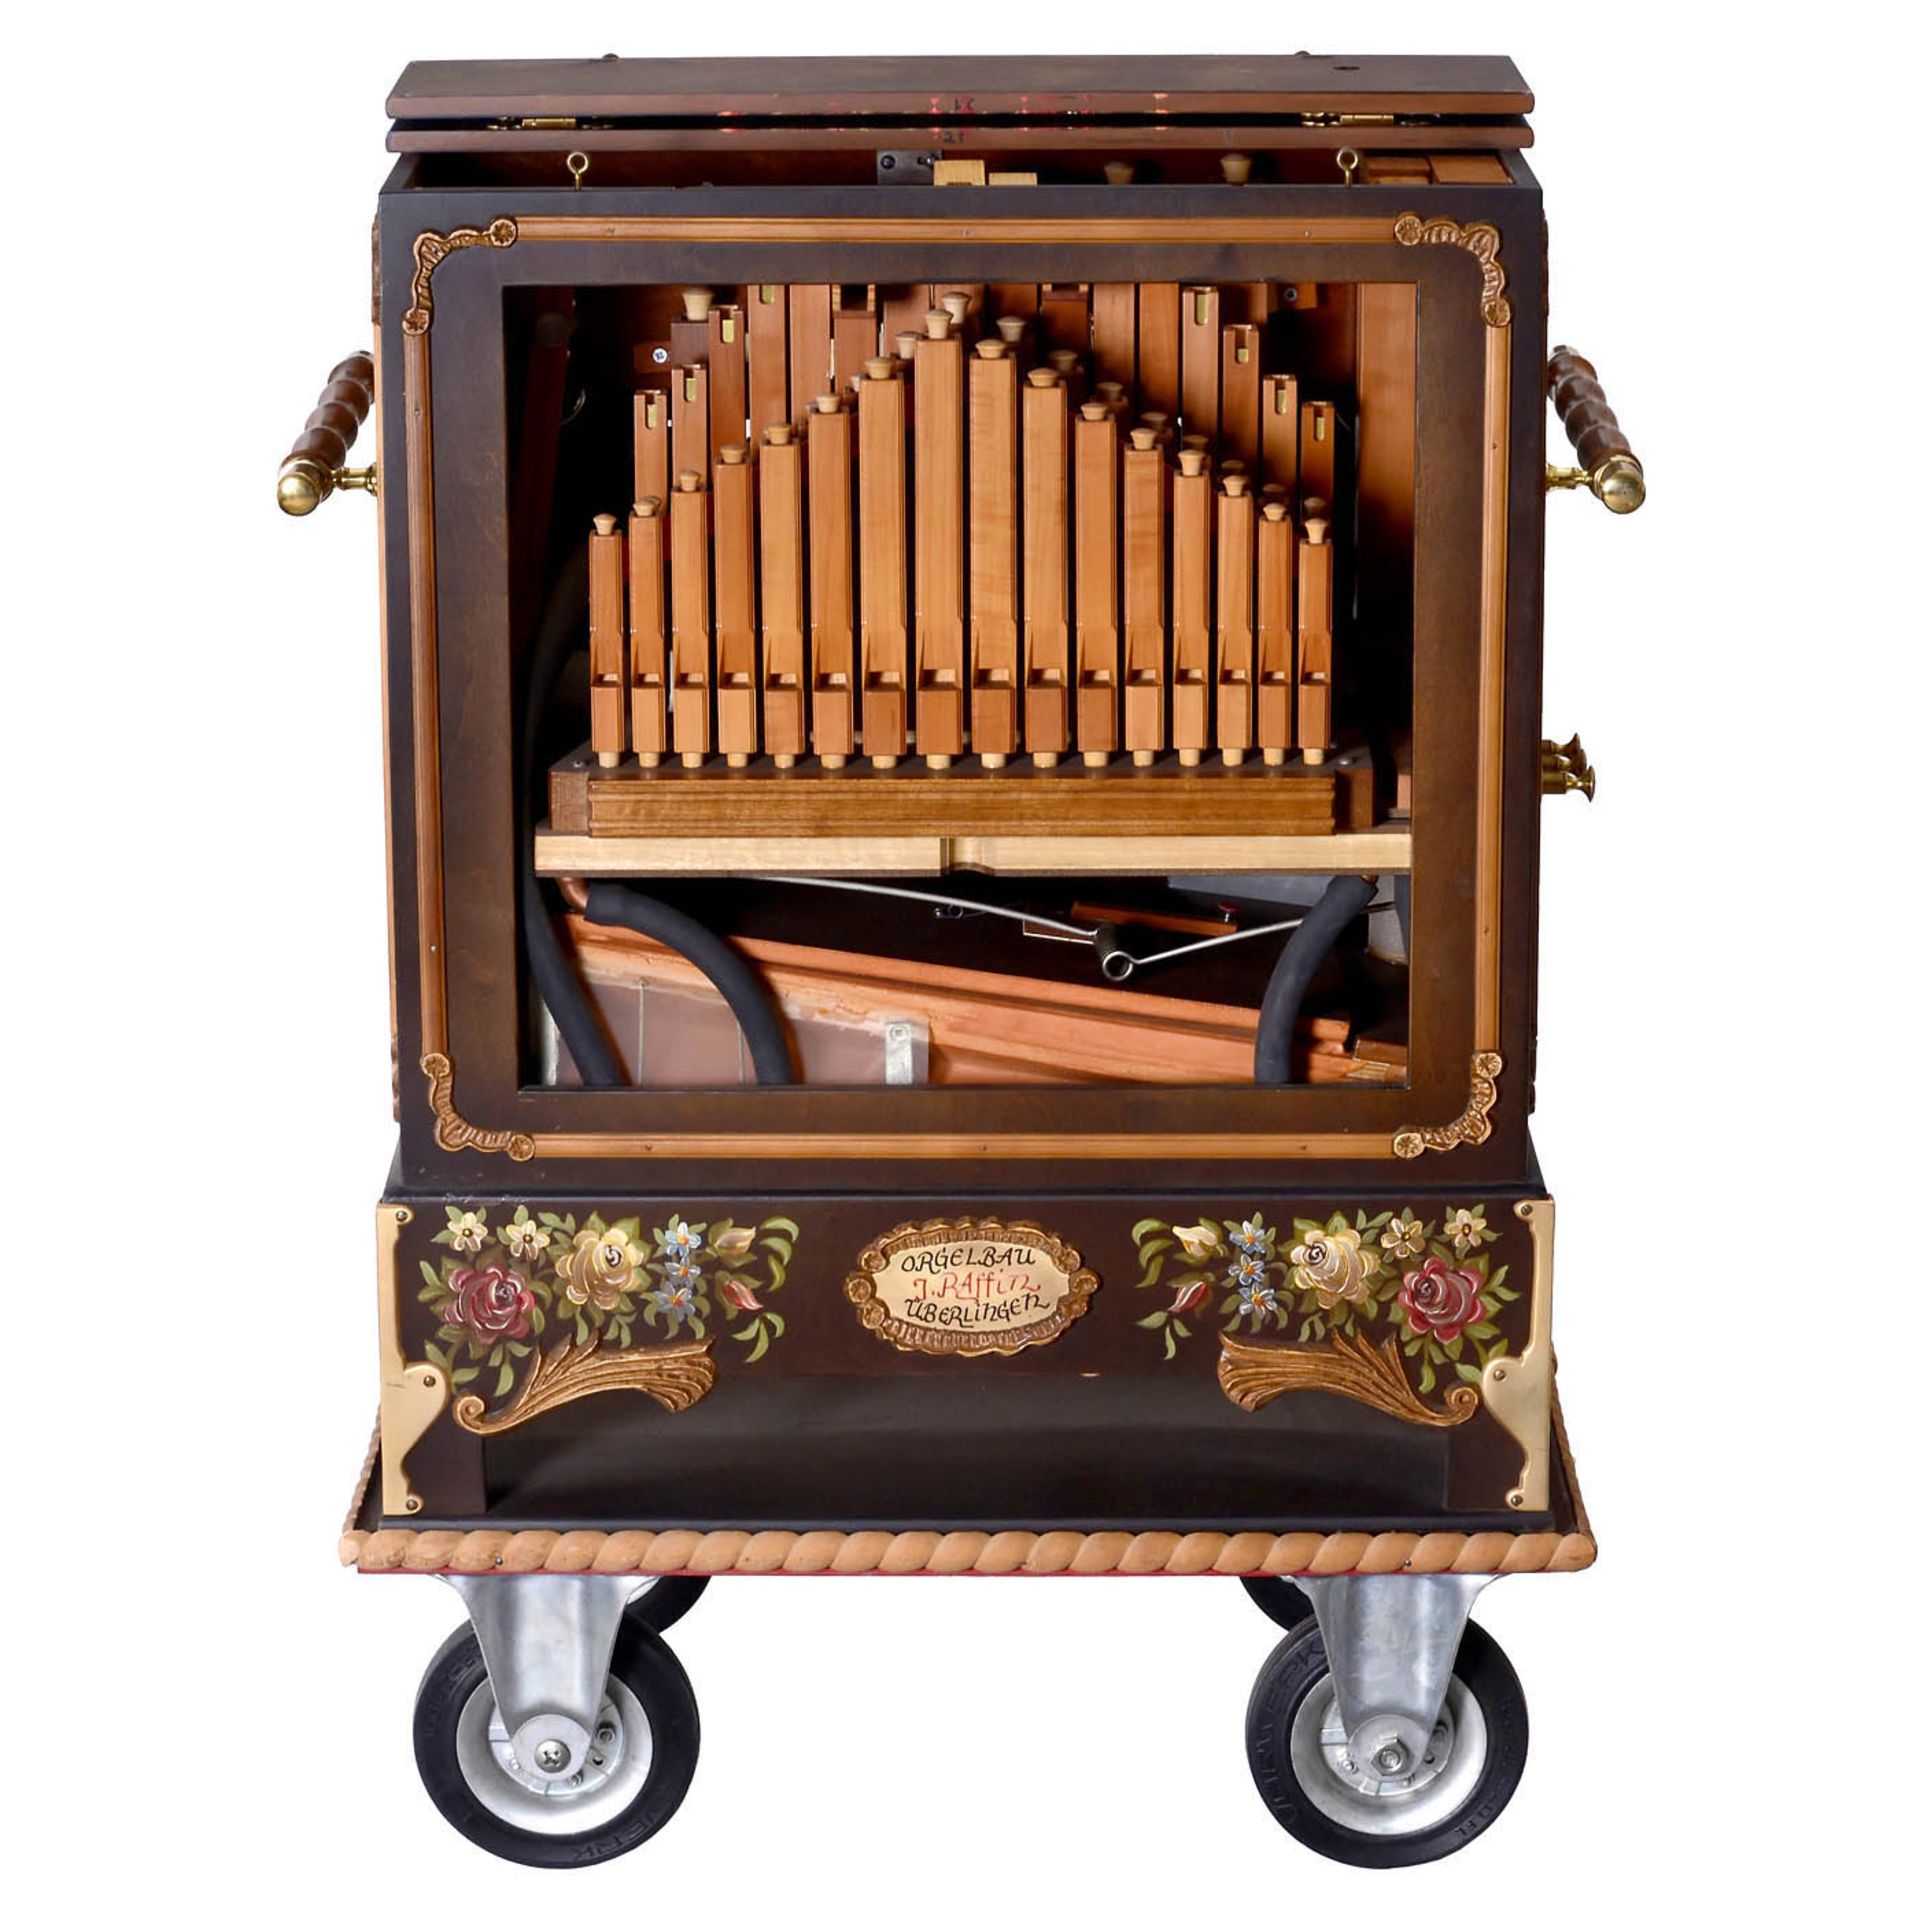 Raffin Model R31/84 "Konzert" Street Organ - Image 6 of 8